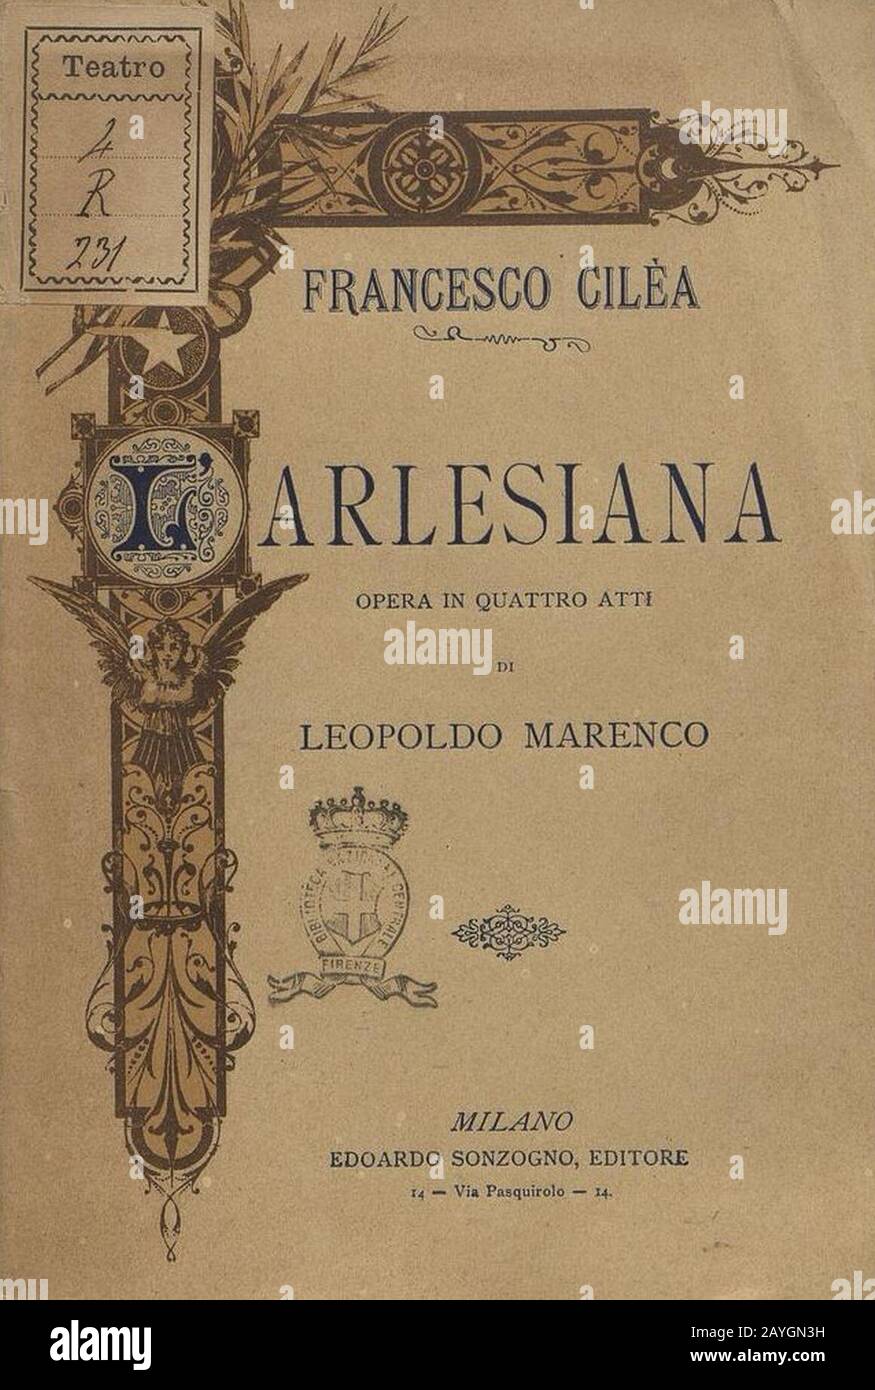 Francesco Cilea - L'Arlesiana - title page of the libretto, Milan 1897. Stock Photo